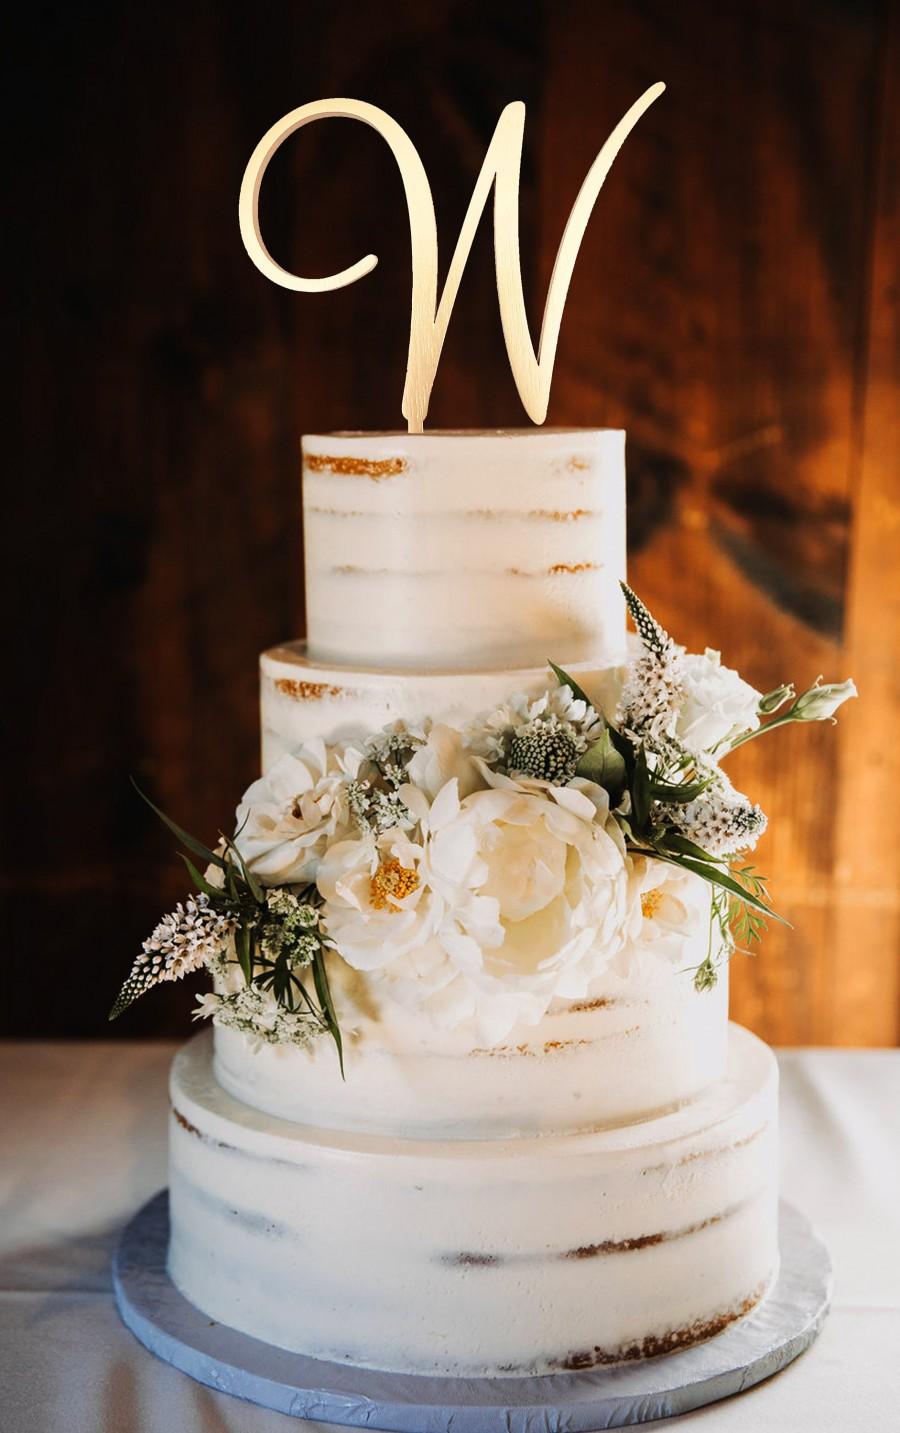 Mariage - W Cake Topper Wedding Cake Topper Gold Personalized Cake Topper w Custom Personalized Wedding Cake Topper initial wedding cake toppers w